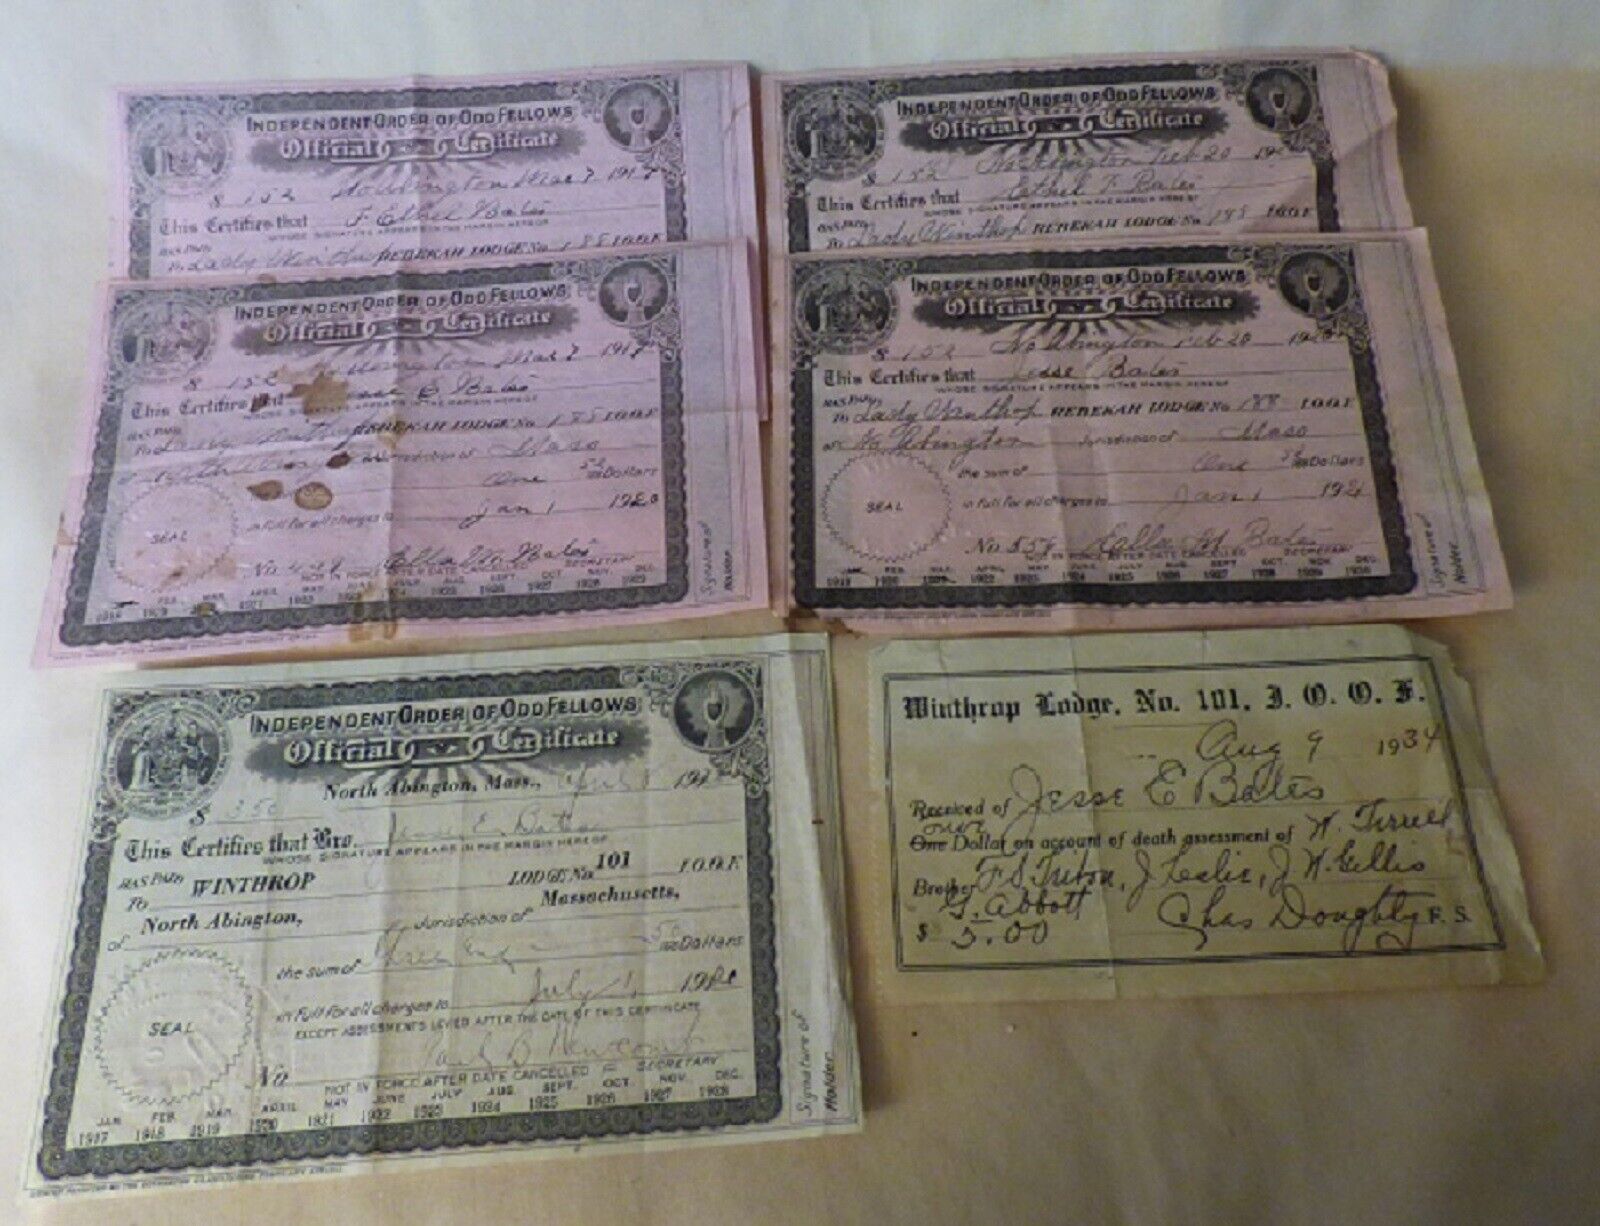 1917-34 6 Receipts Lady Winthrop Rebekah Lodge #188 & IOOF #101 N Abington Mass